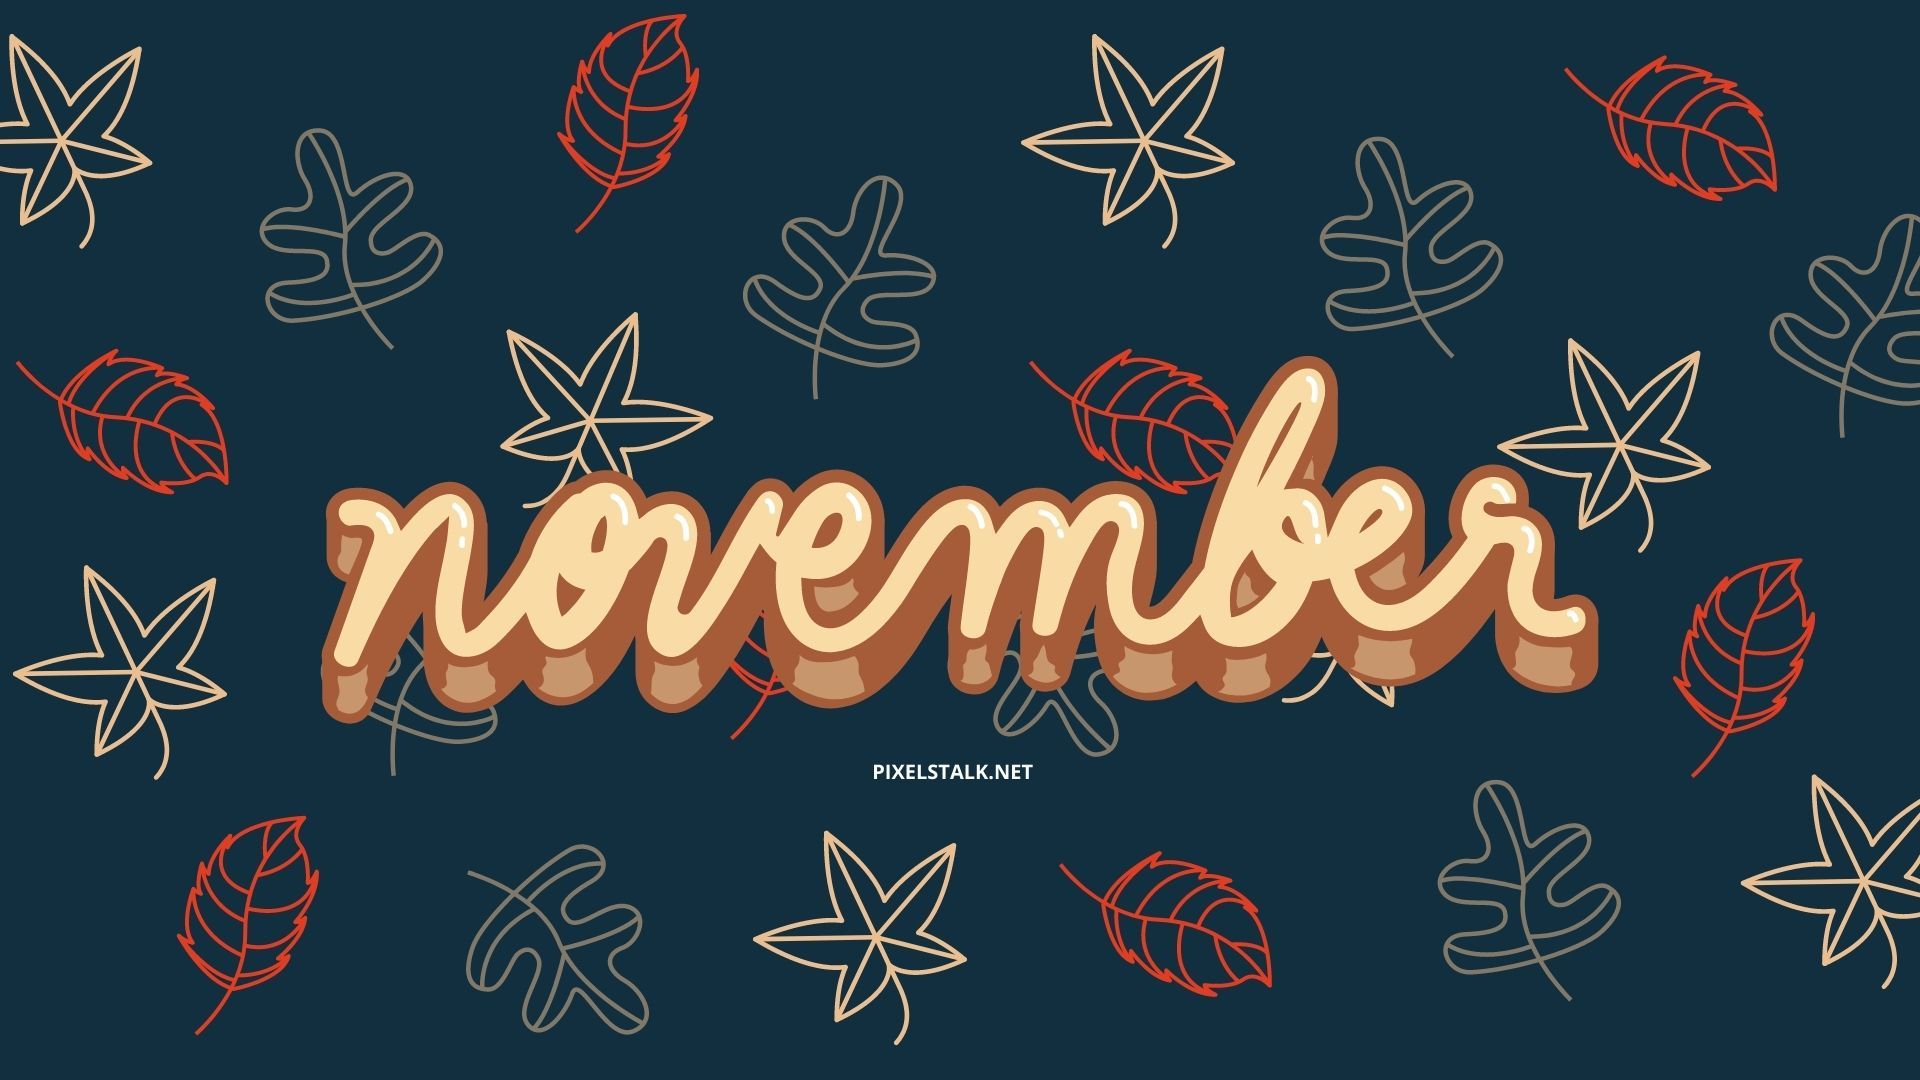 November Desktop Wallpaper